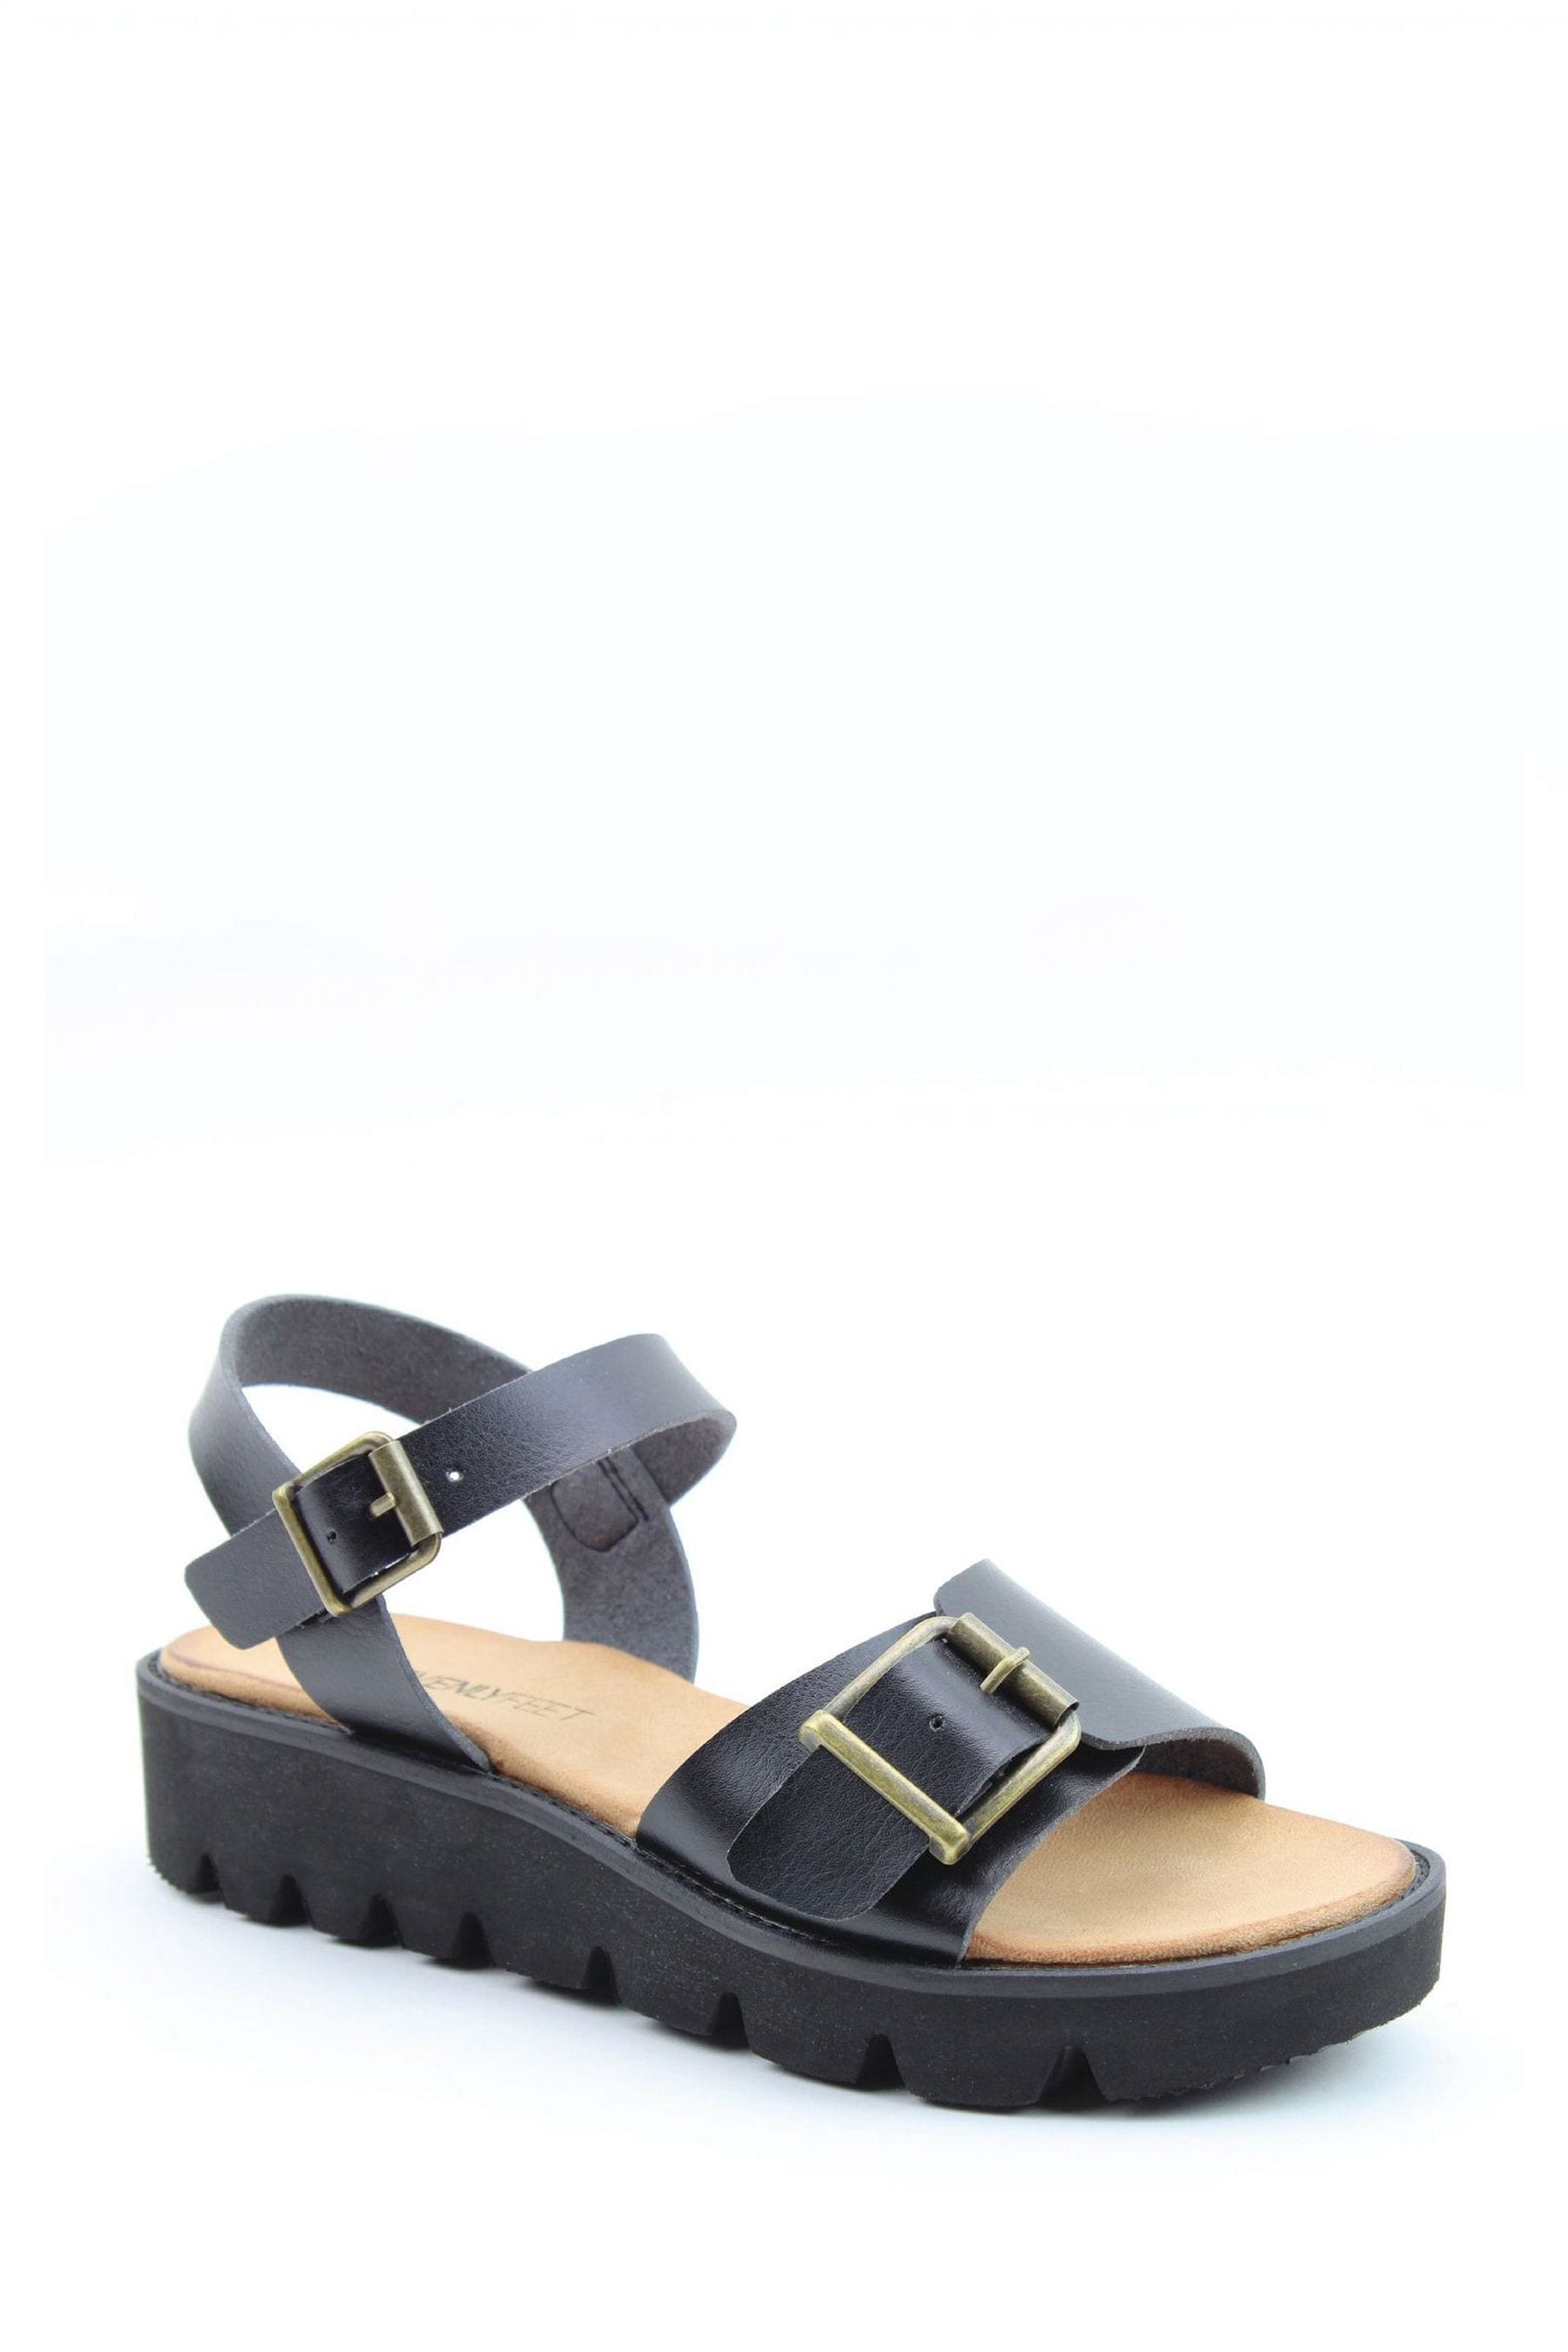 Buy Heavenly Feet Style Trudy Ladies Black Vegan Friendly Sandals from ...